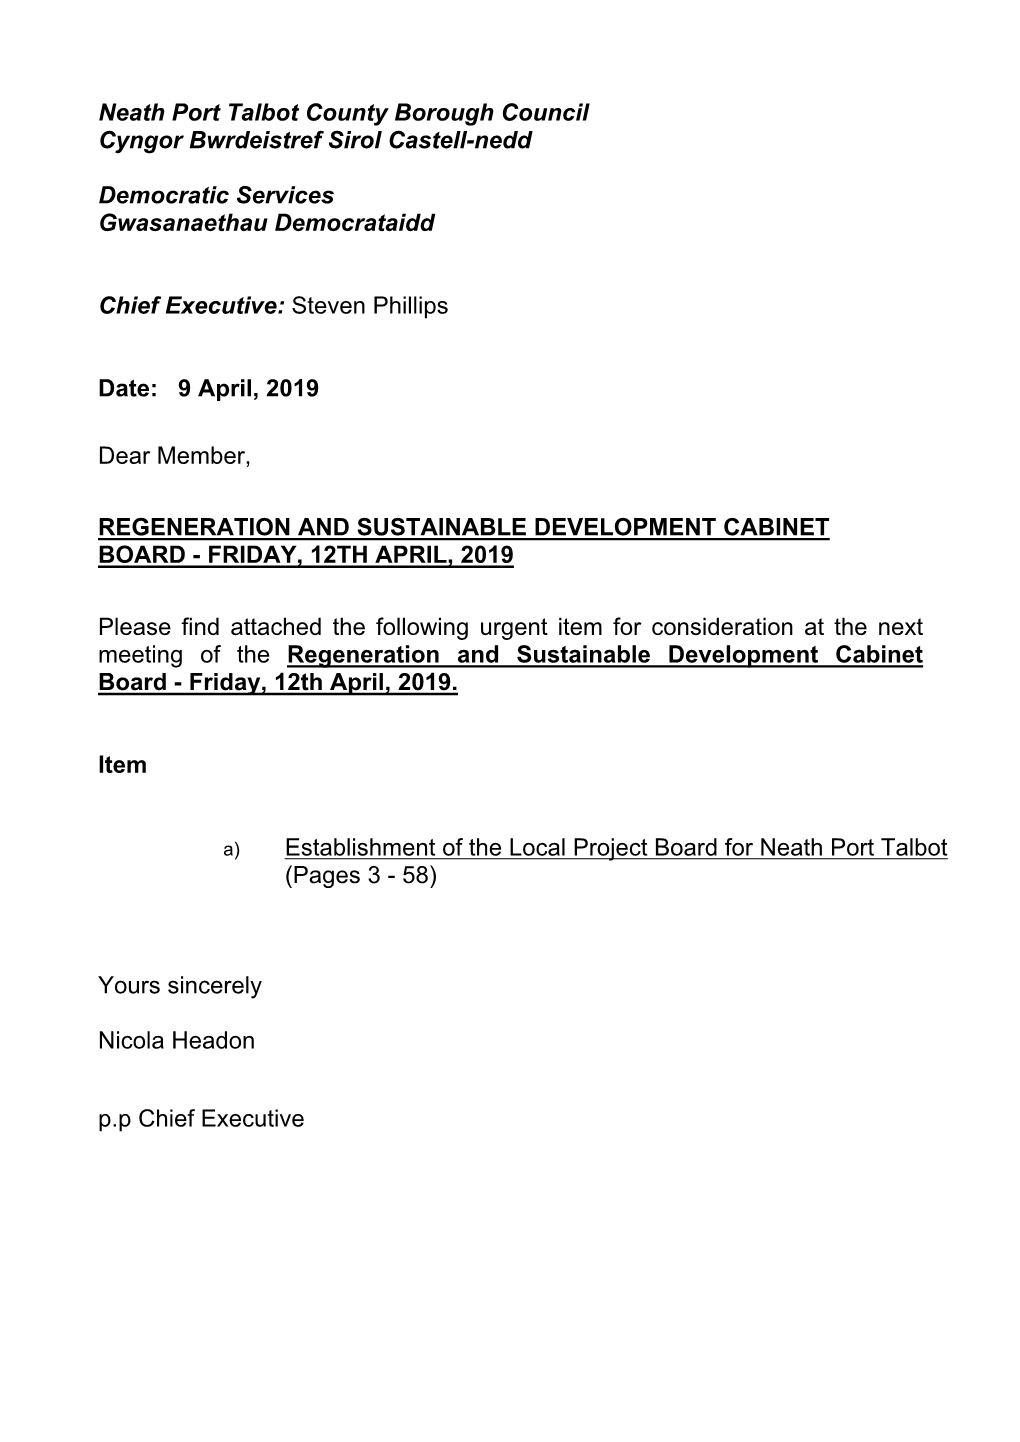 Establishment of the Local Project Board for Neath Port Talbot PDF 5 MB